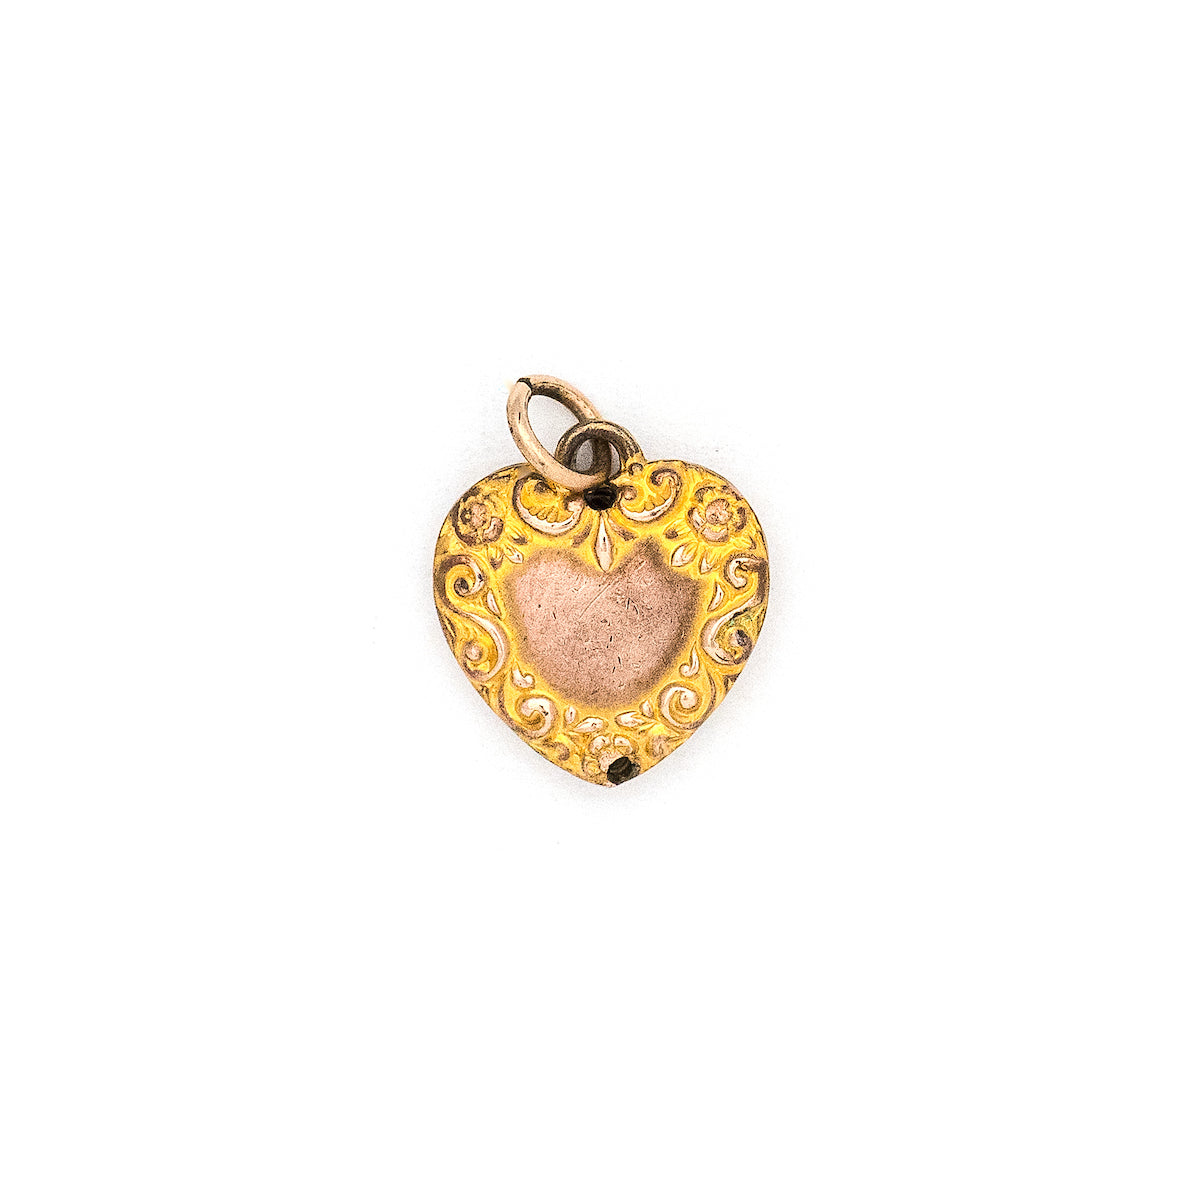 Petite Heart Lock Charm Necklace